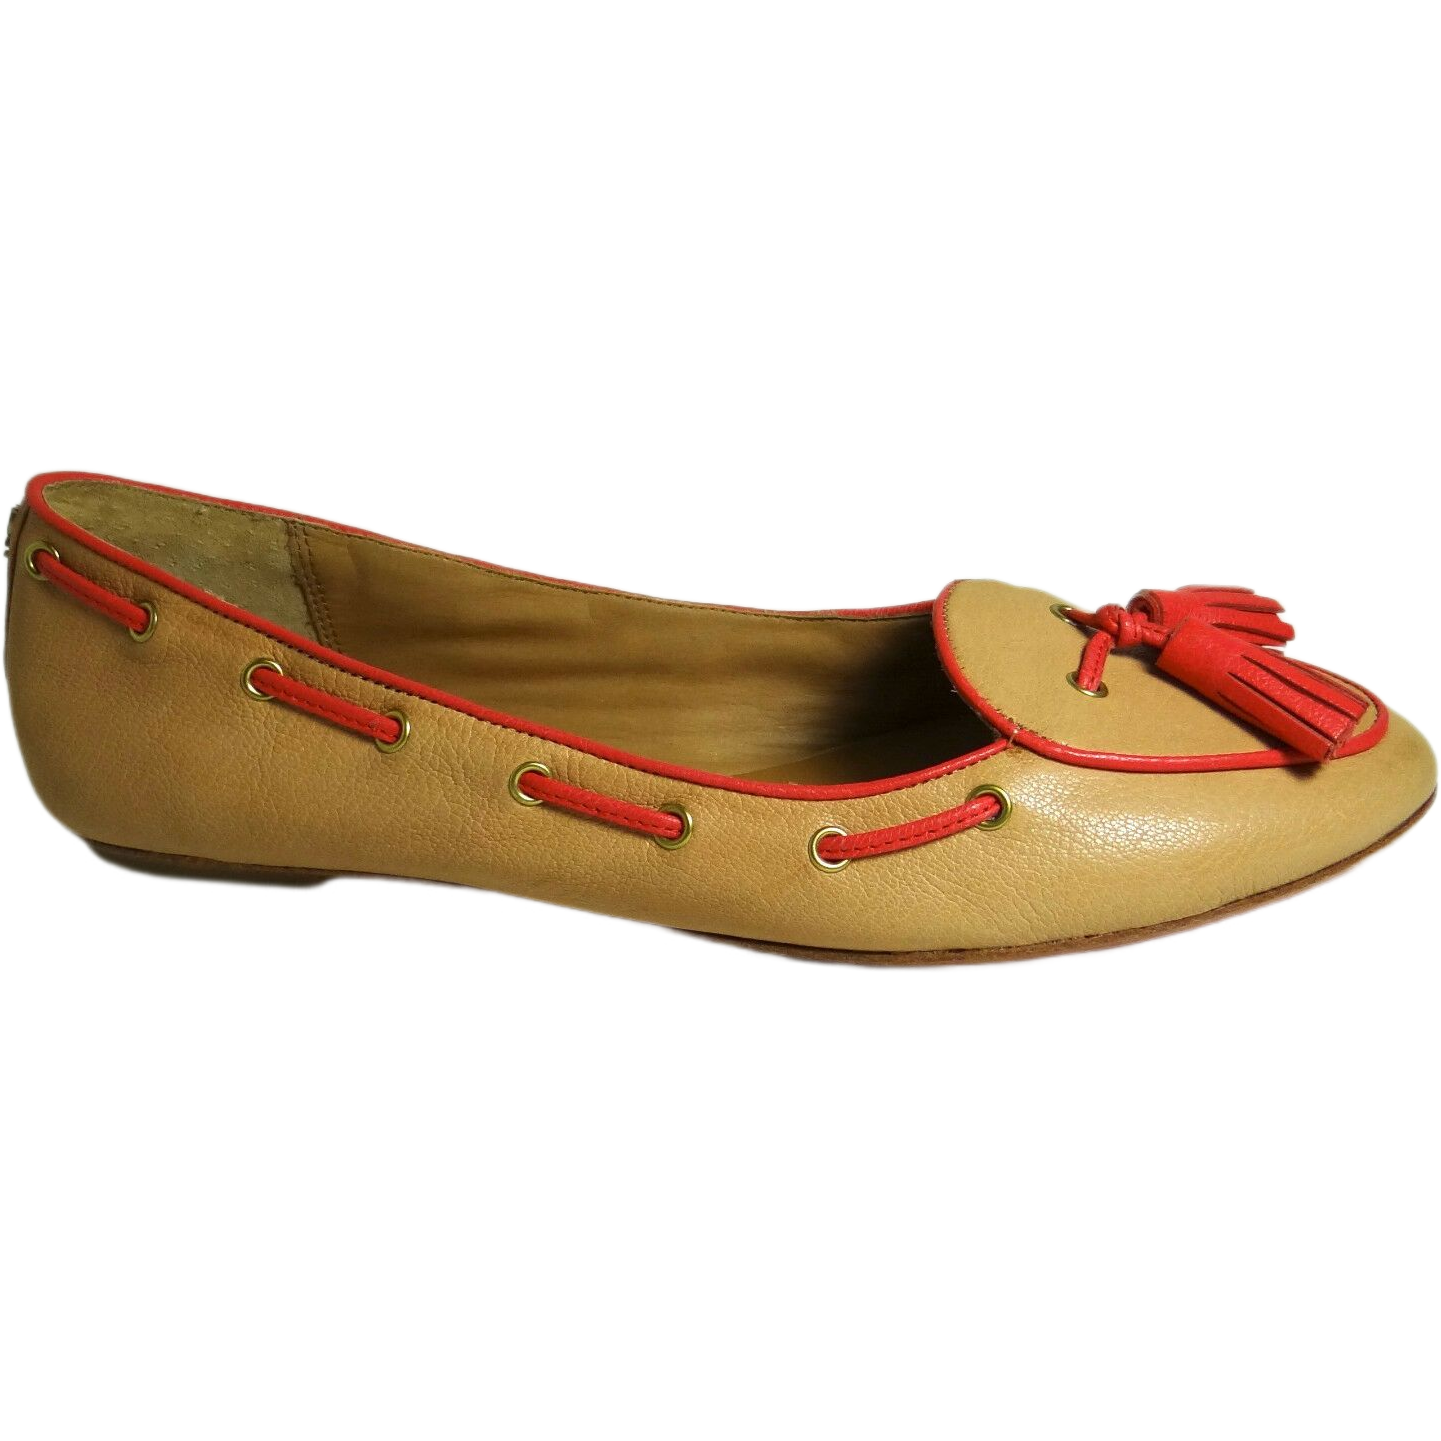 COACH Manika Soft Tan Leather Flat Shoes manika-soft-tan-leather-flat-shoes 29095784528162-7ee7546b-b30.png